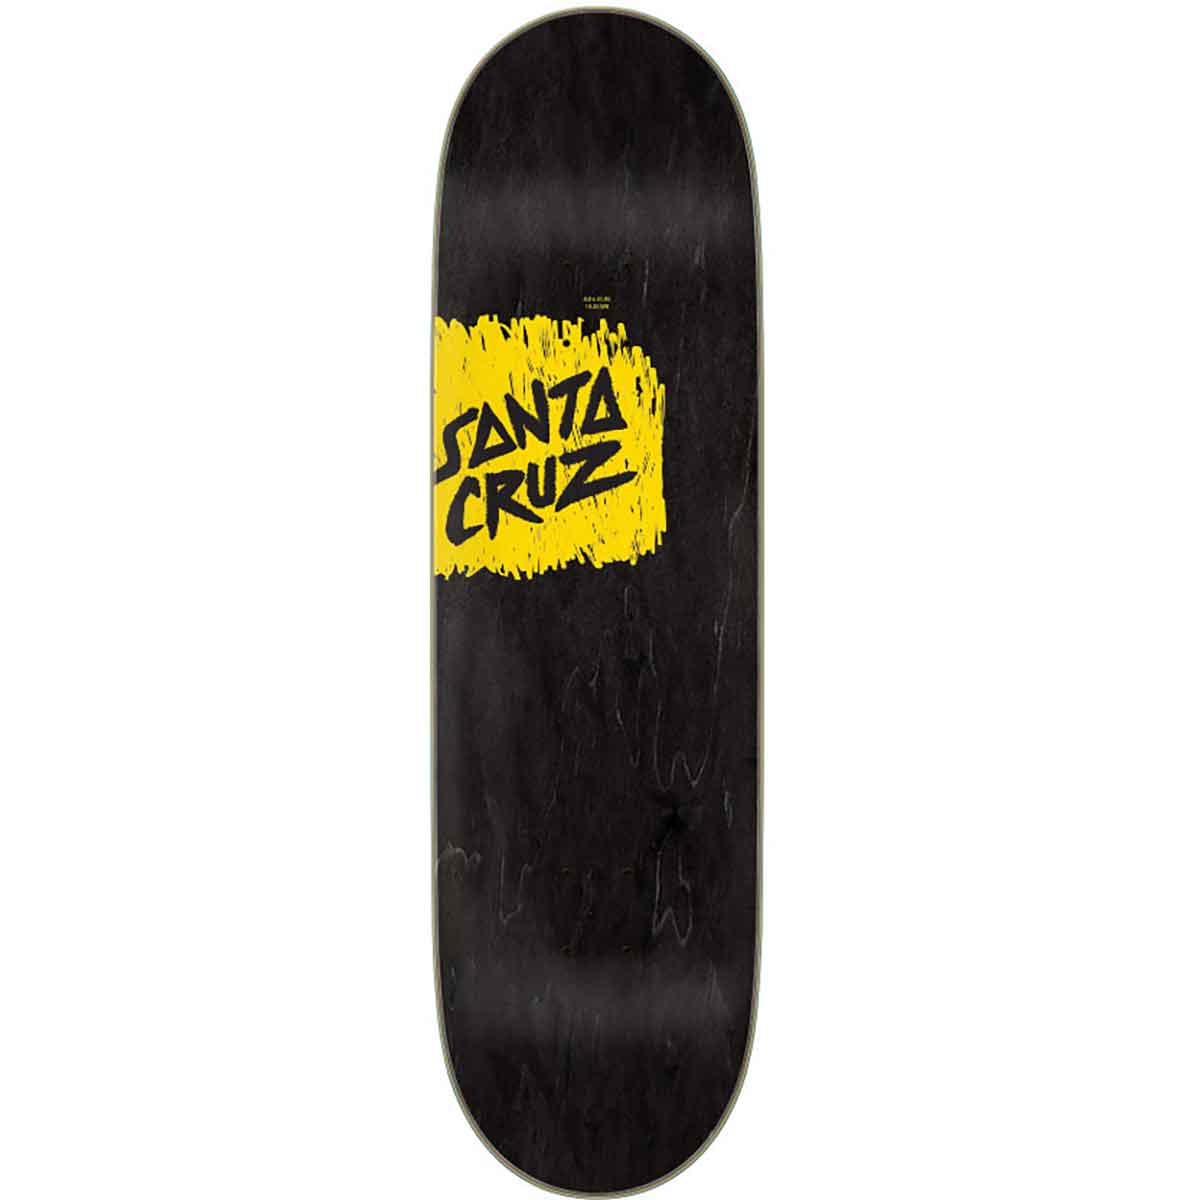 Large over 7" Santa Cruz Eric Dressen Skateboard Deck Shaped Sticker 